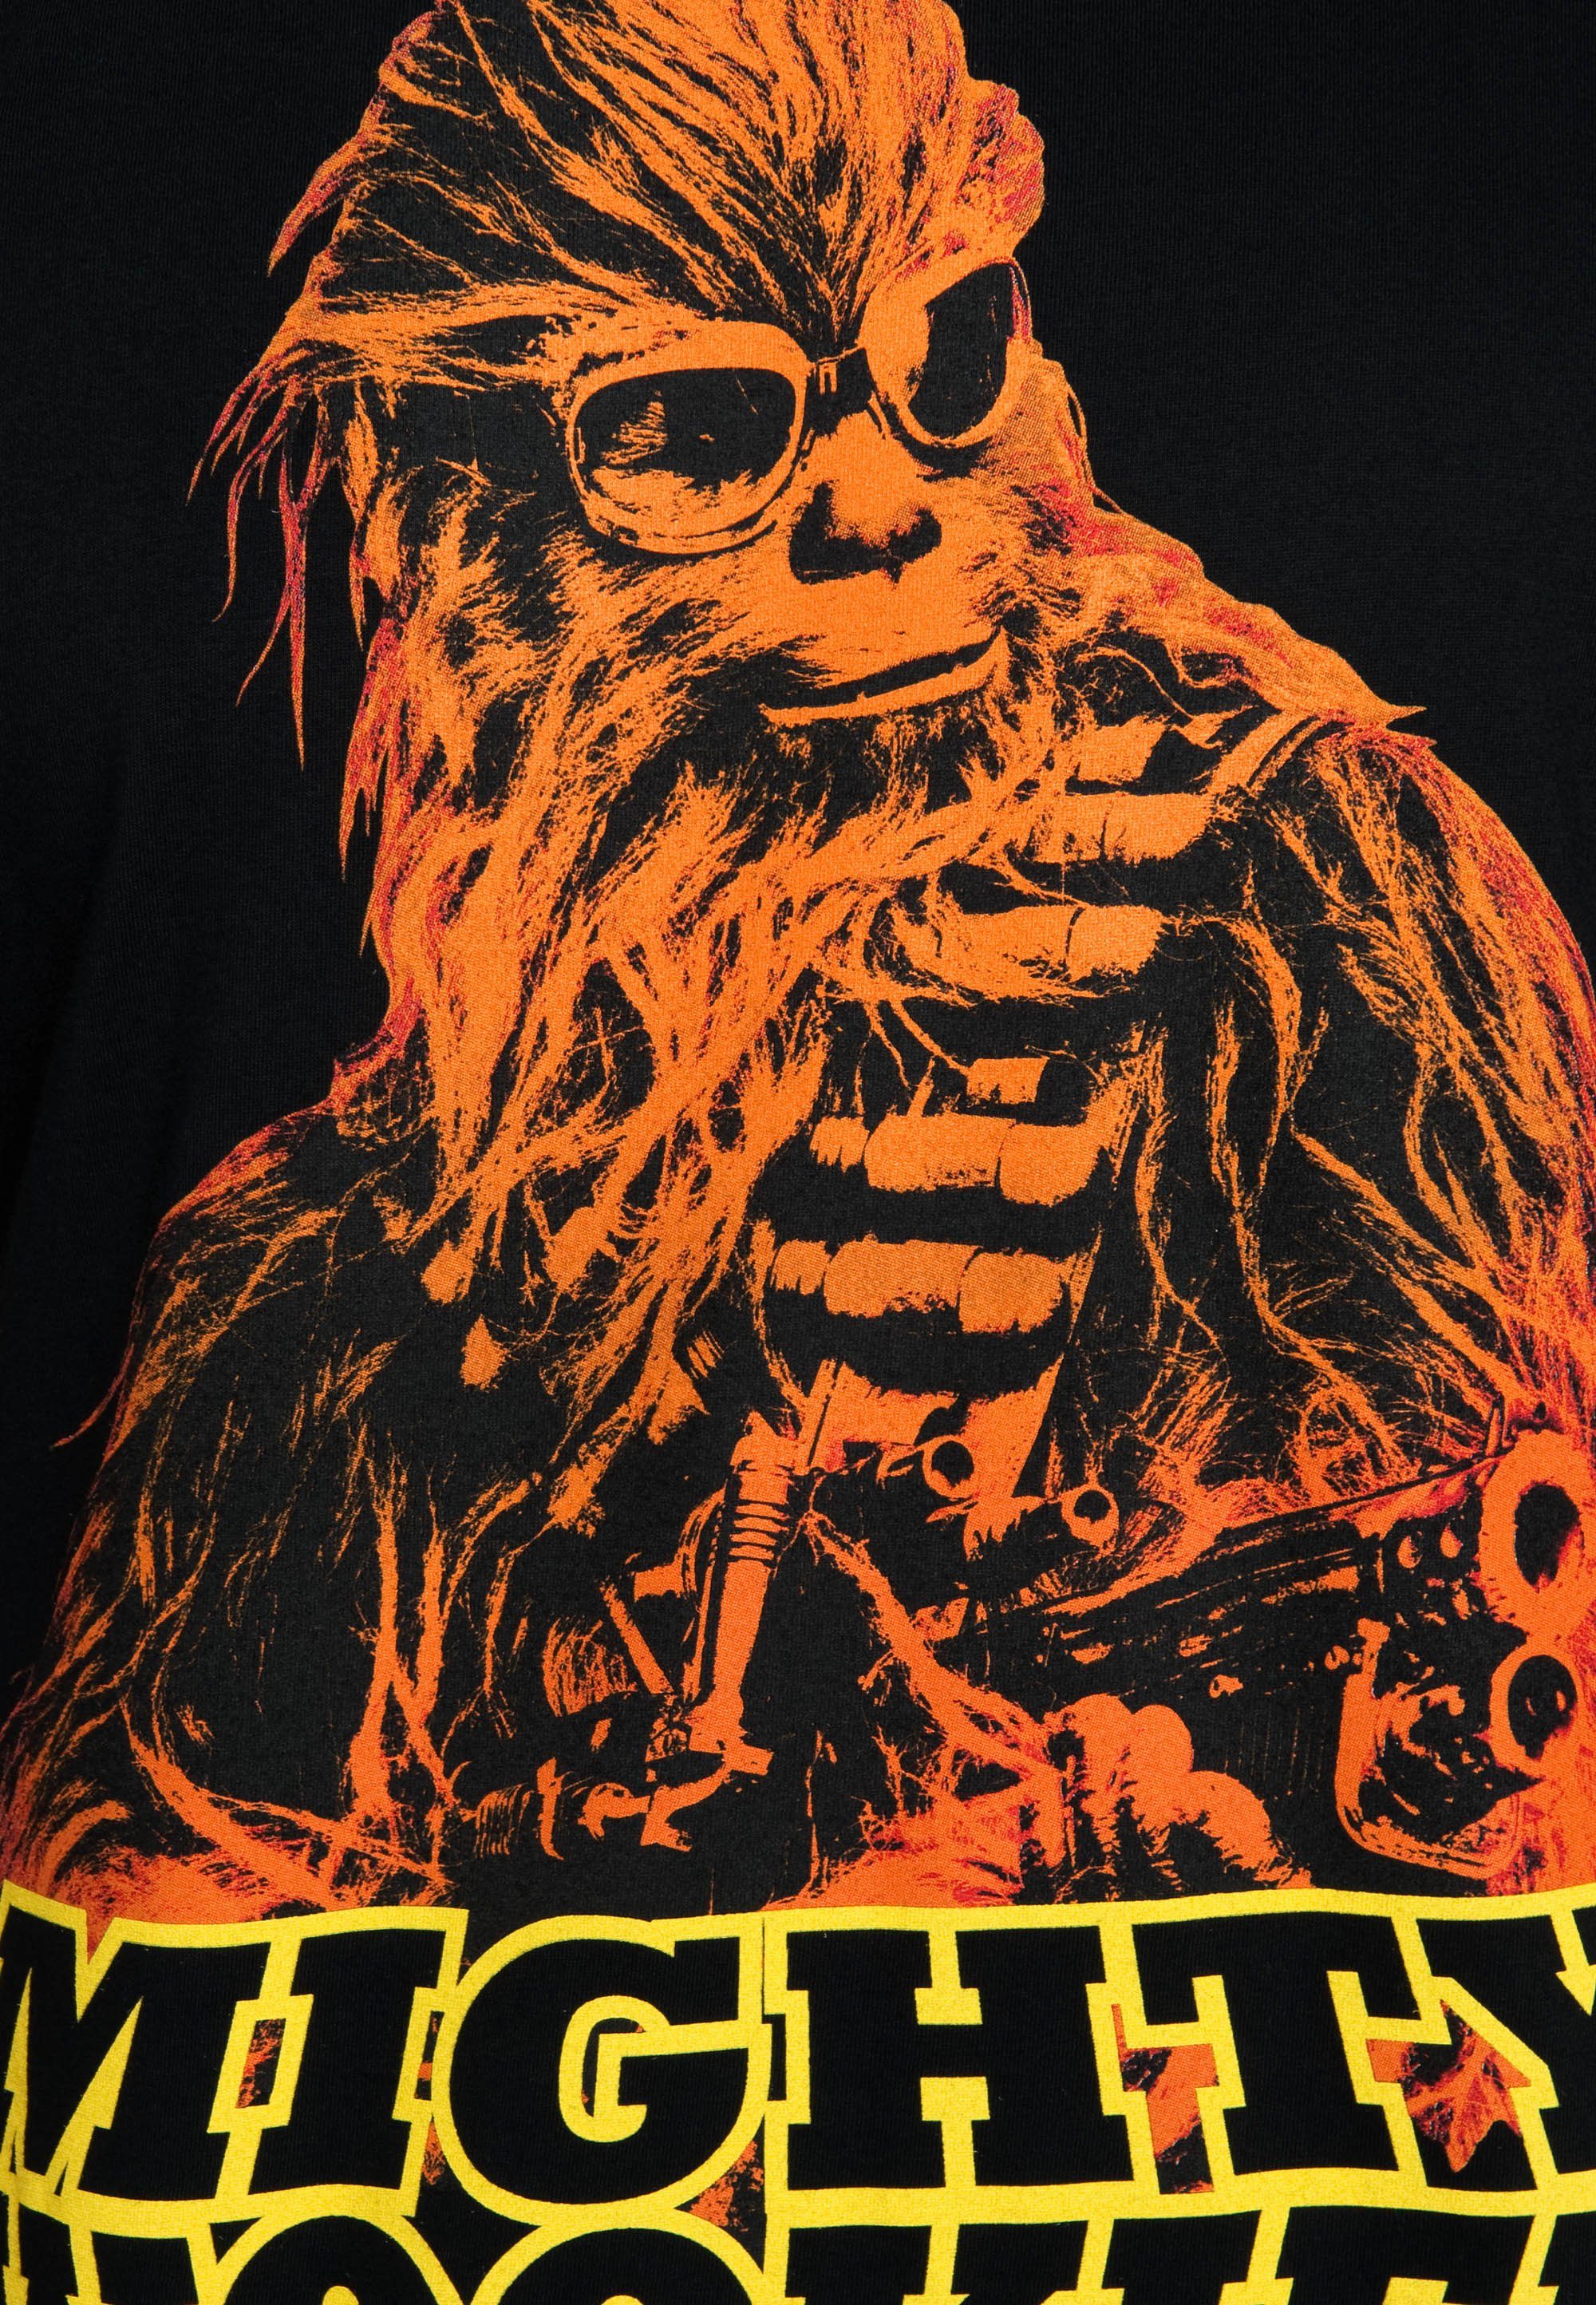 Story T-Shirt mit A Star LOGOSHIRT Wars Chewbacca-Print